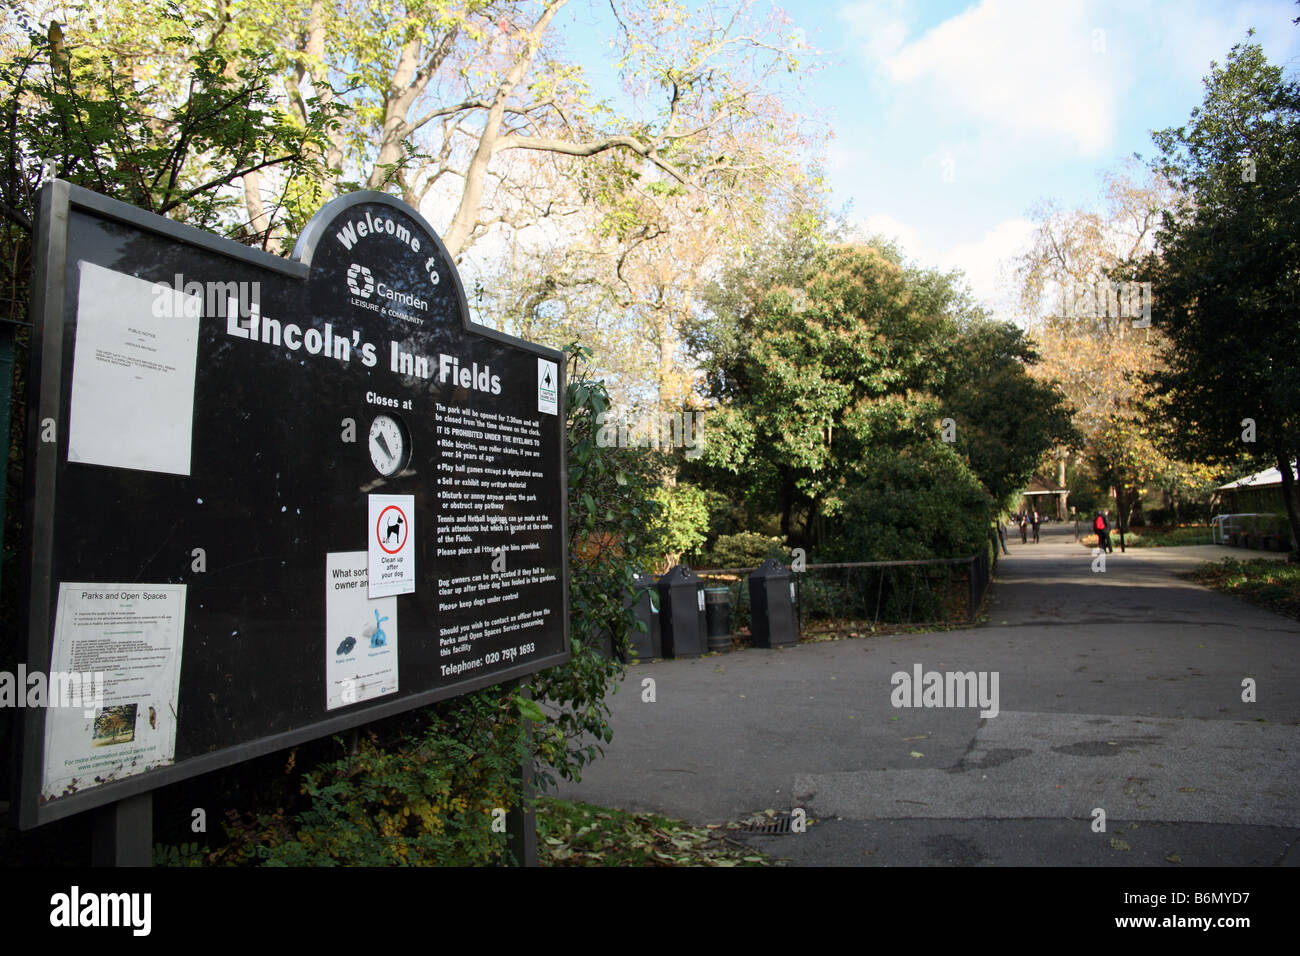 Eingang zum Lincoln es Inn Fields, London Stockfoto